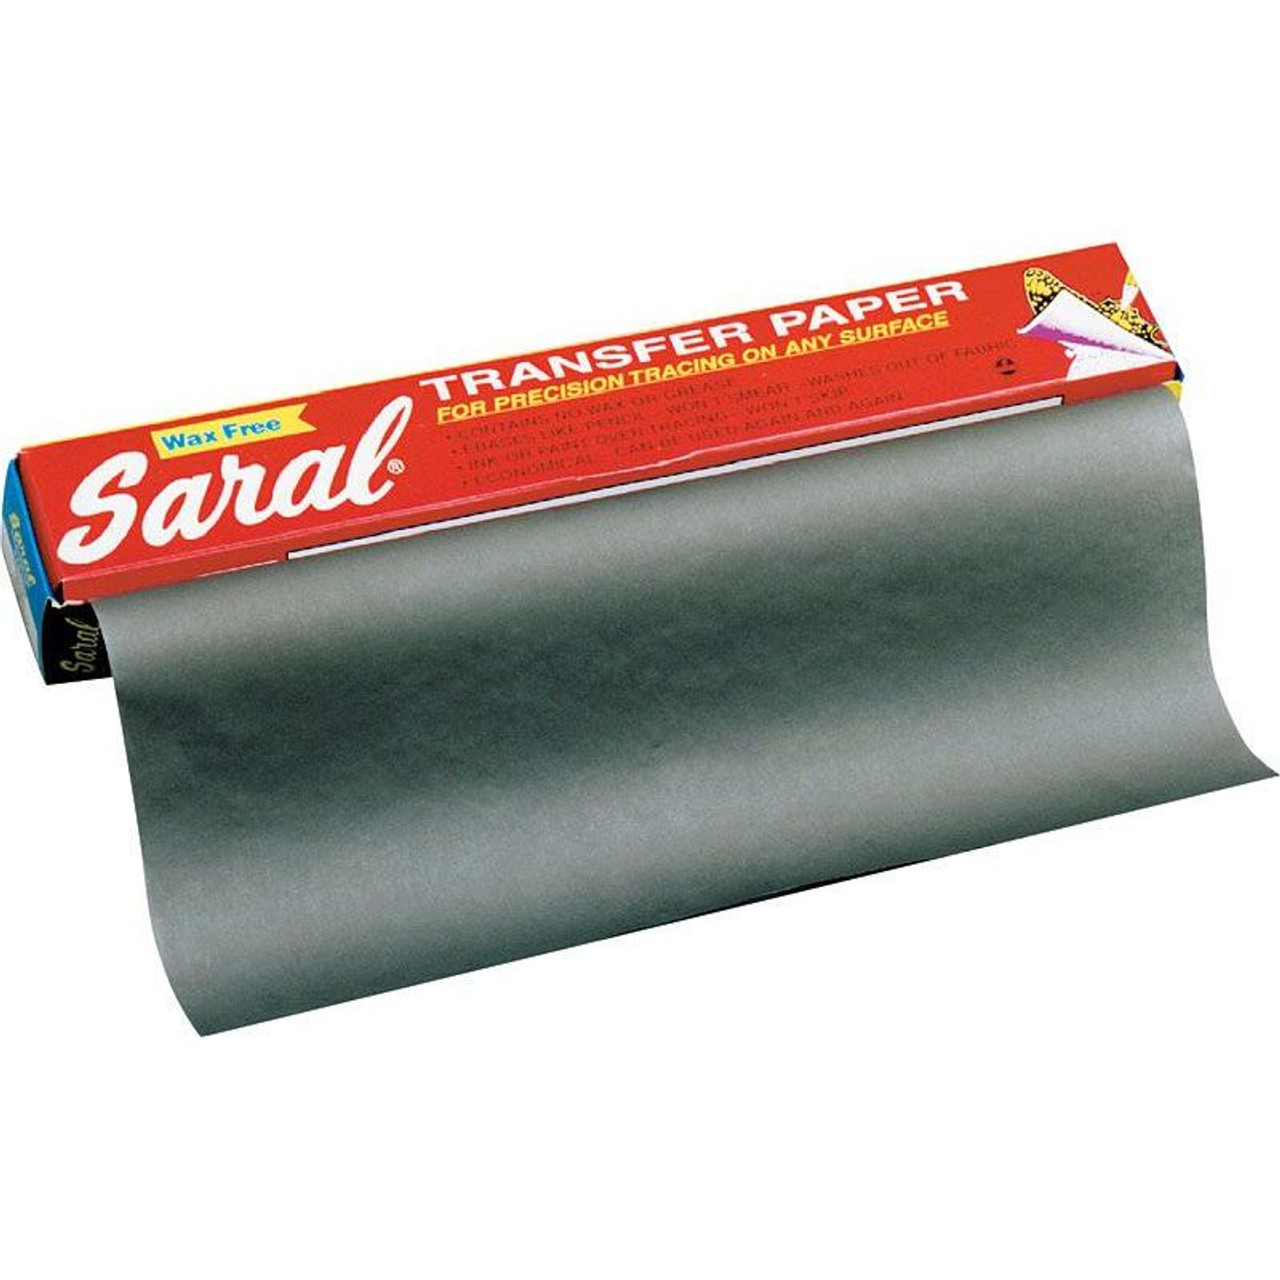 Saral Transfer paper - rol 31,6cmx3,66m - graphite - Schleiper